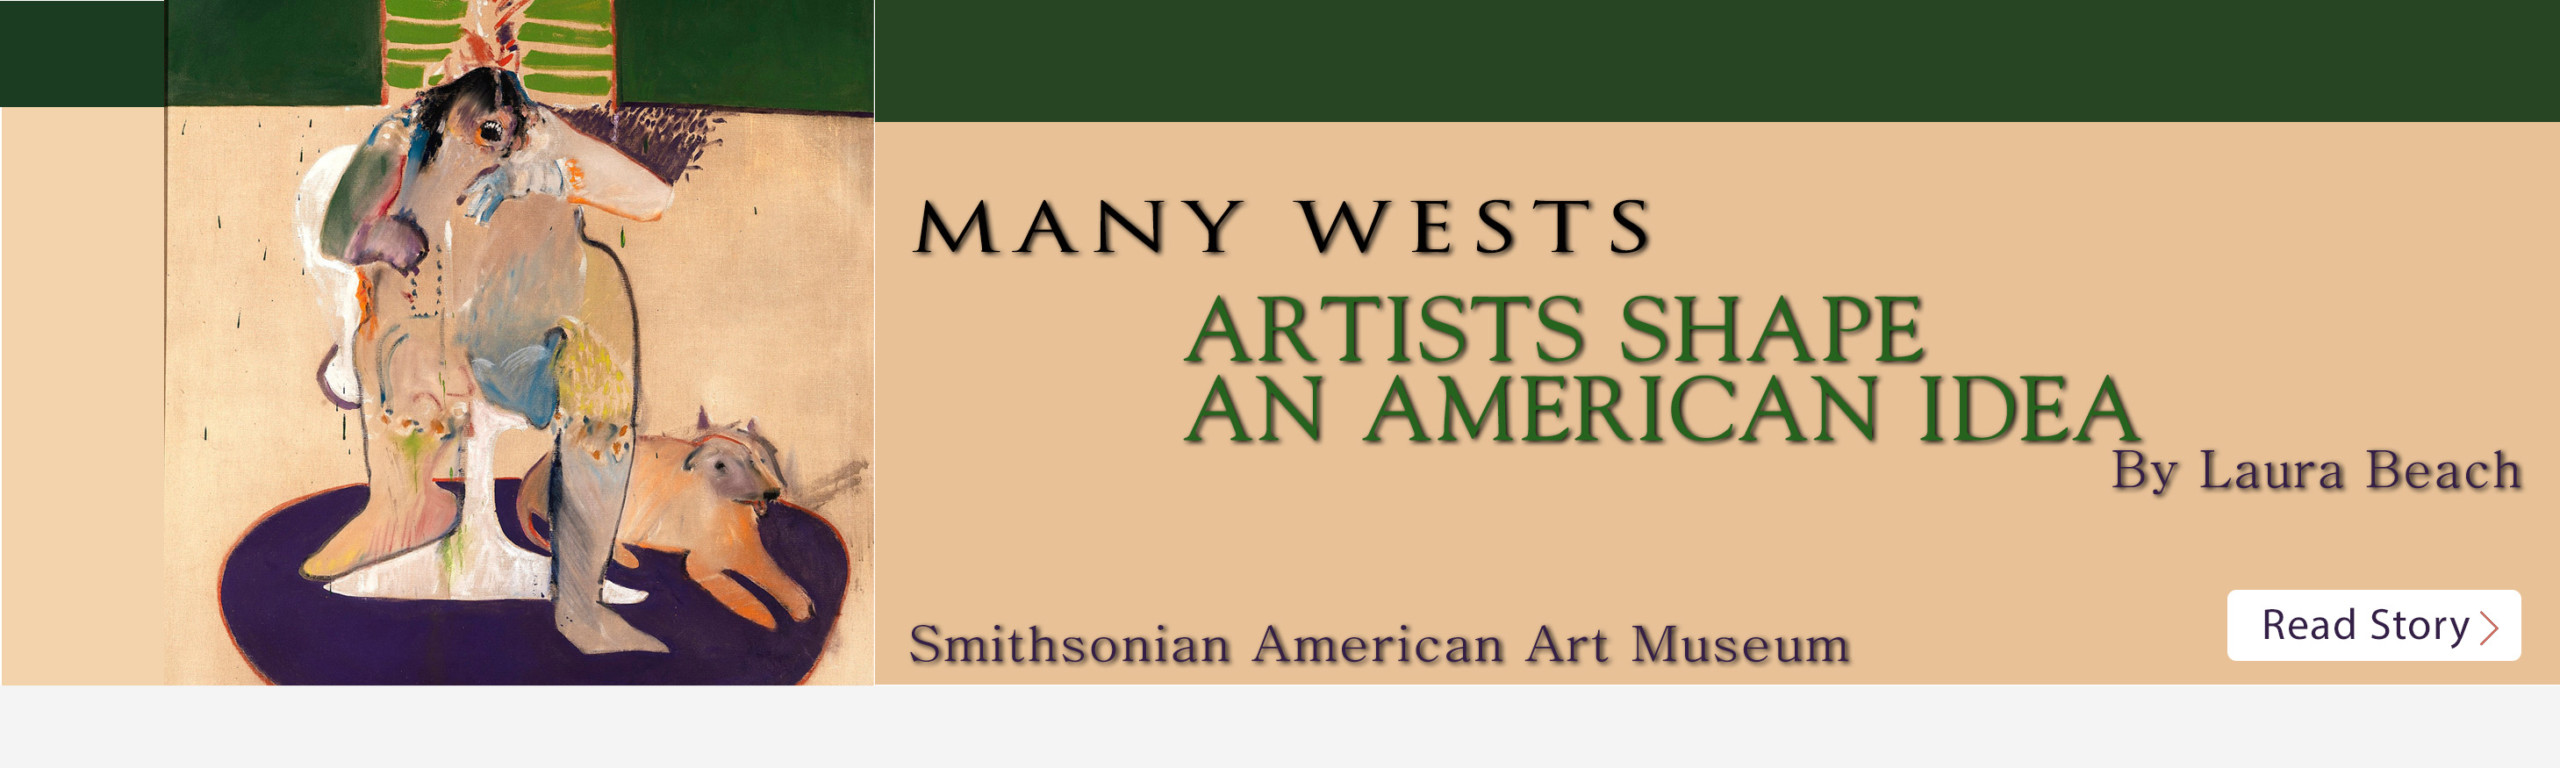 Smithsonian American Art Museum – Many Wests: Artists Shape An American Idea